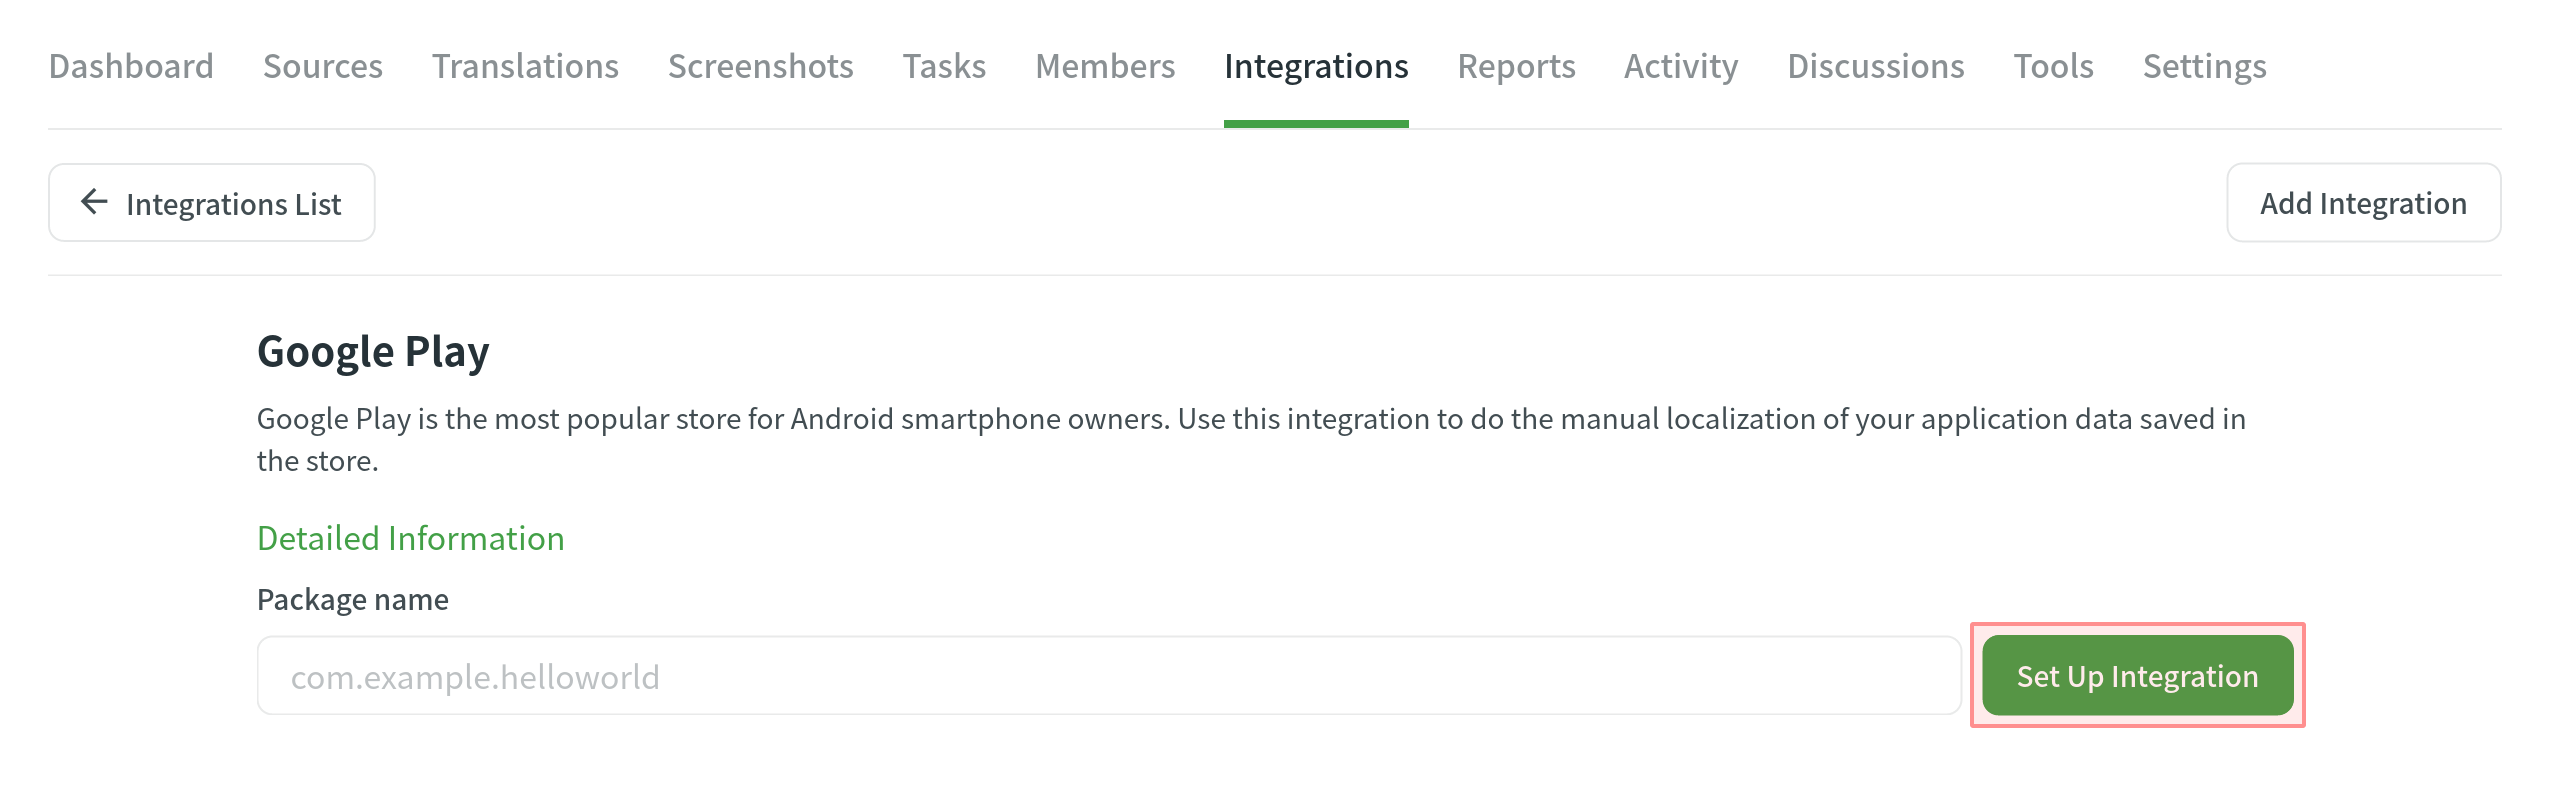 Google Play Integration Set Up